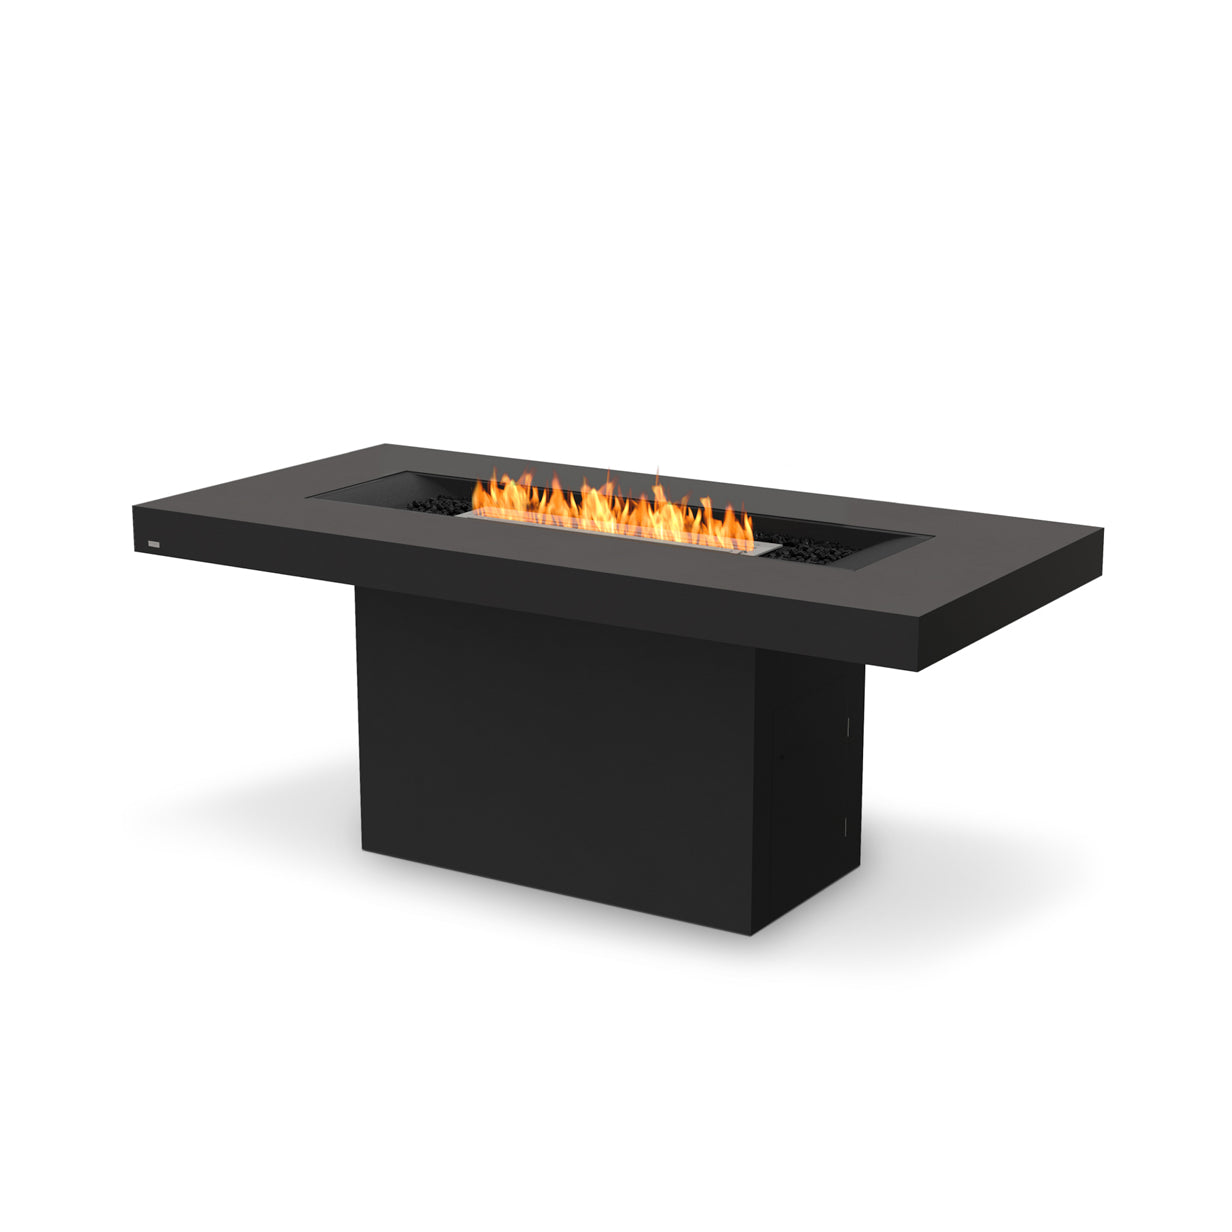 GIN 90 (BAR) FIRE PIT TABLE - ETHANOL